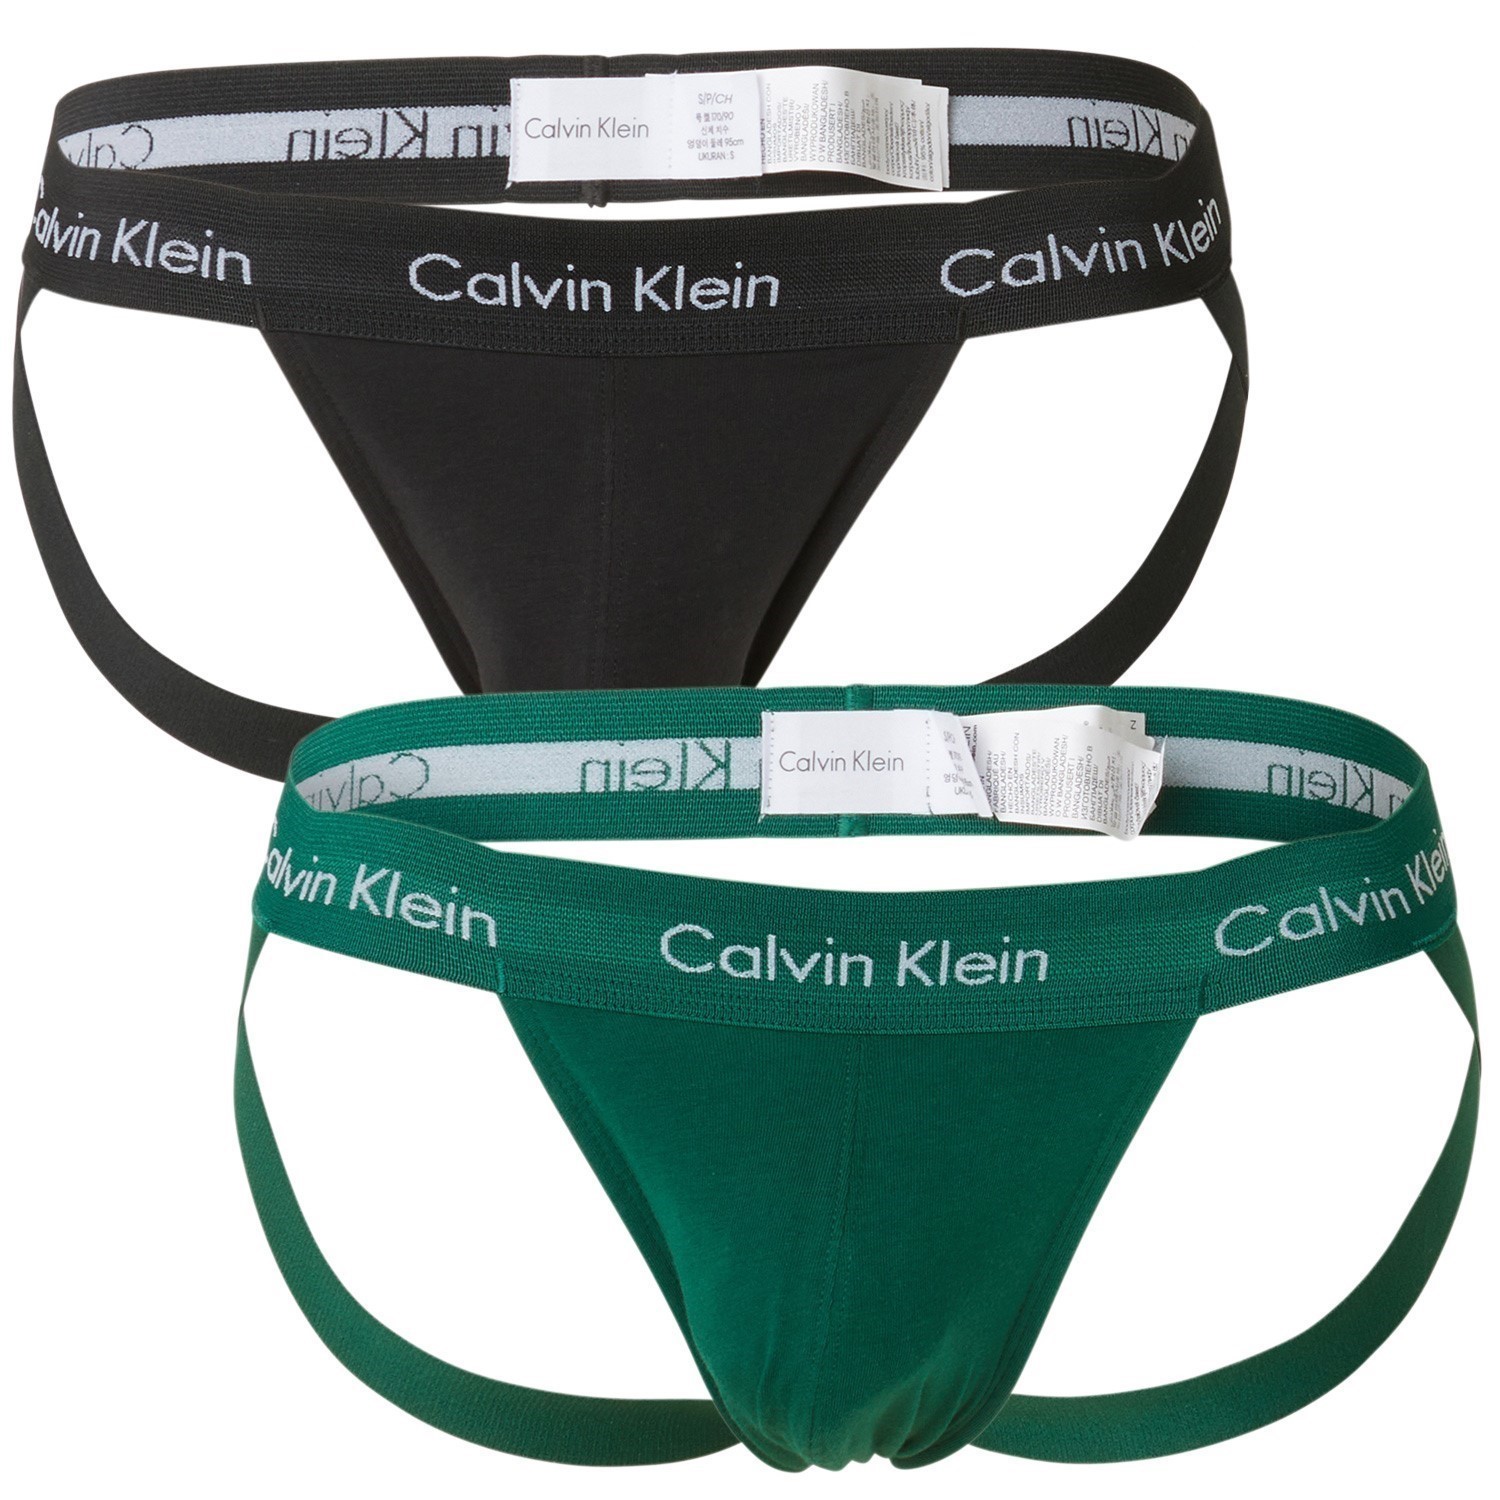 2-Pack Calvin Klein Cotton Stretch Jockstrap - Jockstrap - Trunks -  Underwear - Timarco.co.uk